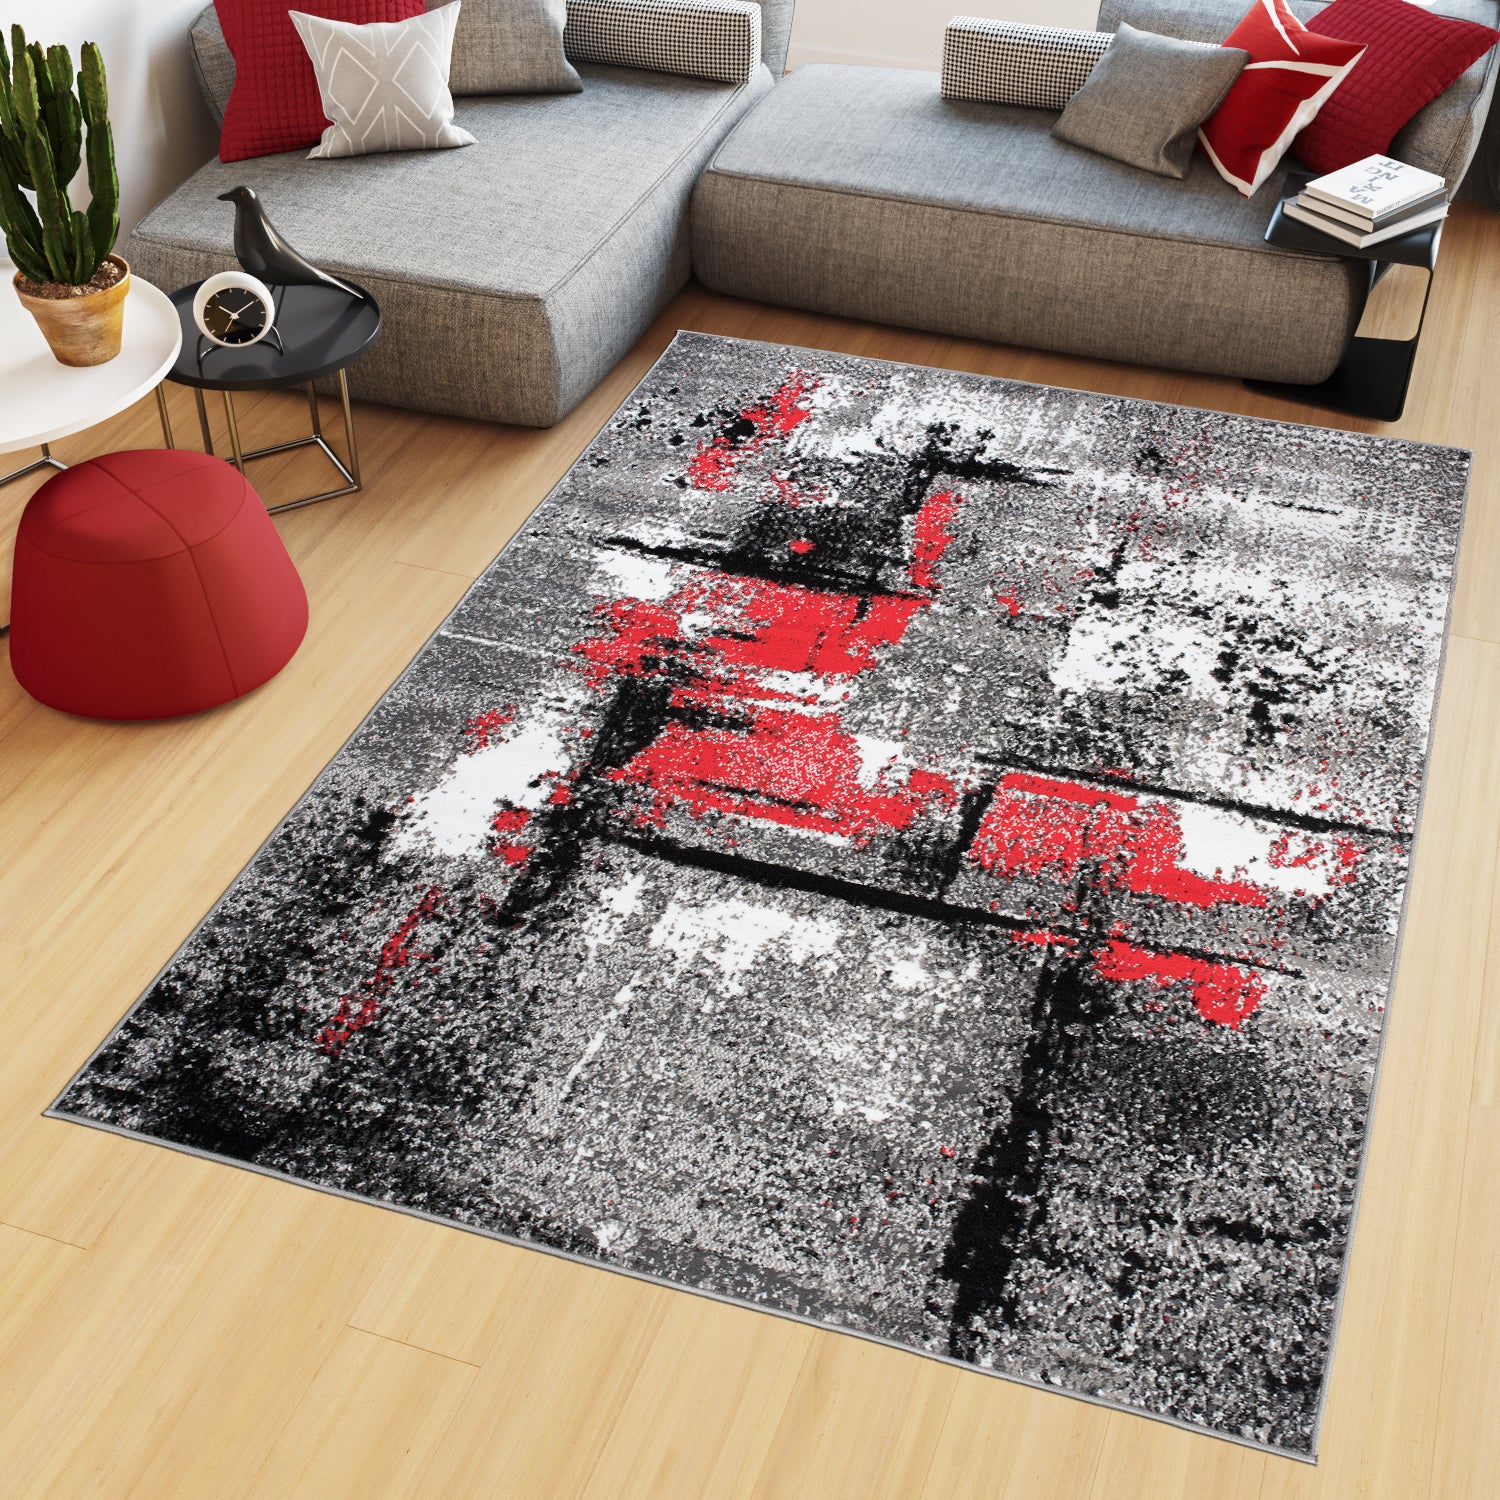 Tapiso maya tapis salon moderne moucheté gris rouge blanc noir fin 180 x  250 cm Q542A RED 1,80-2,50 MAYA PP ESM - Conforama